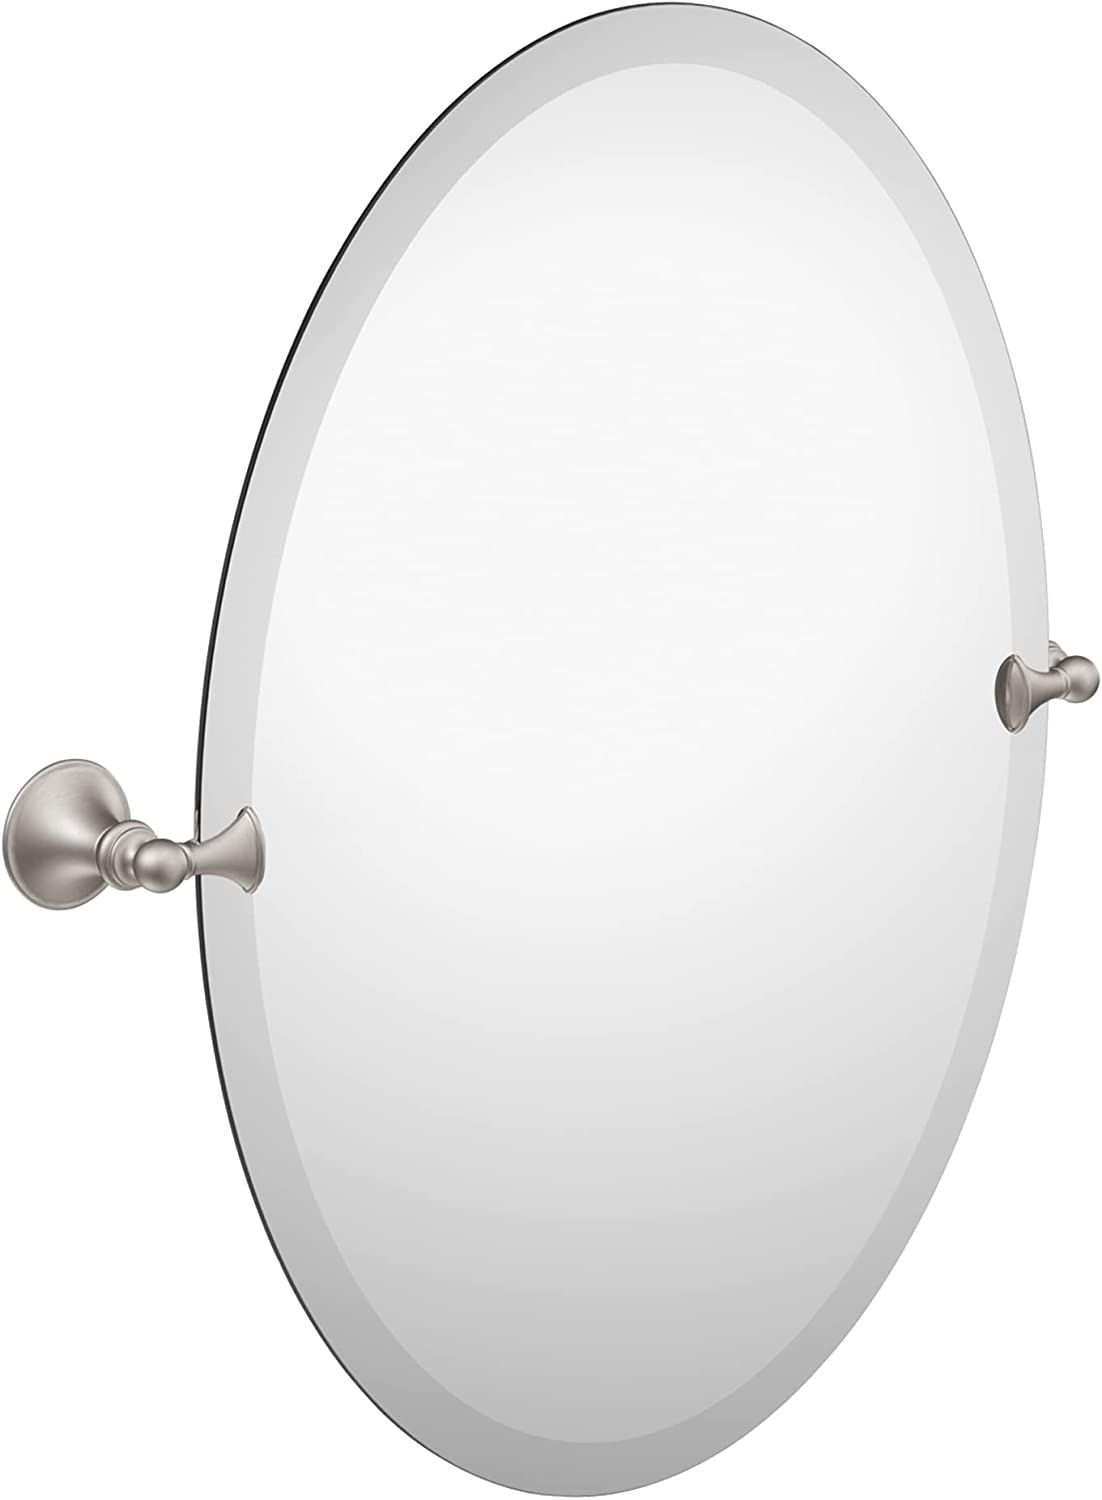 Moen Pivoting Bathroom Tilting Mirror Logo